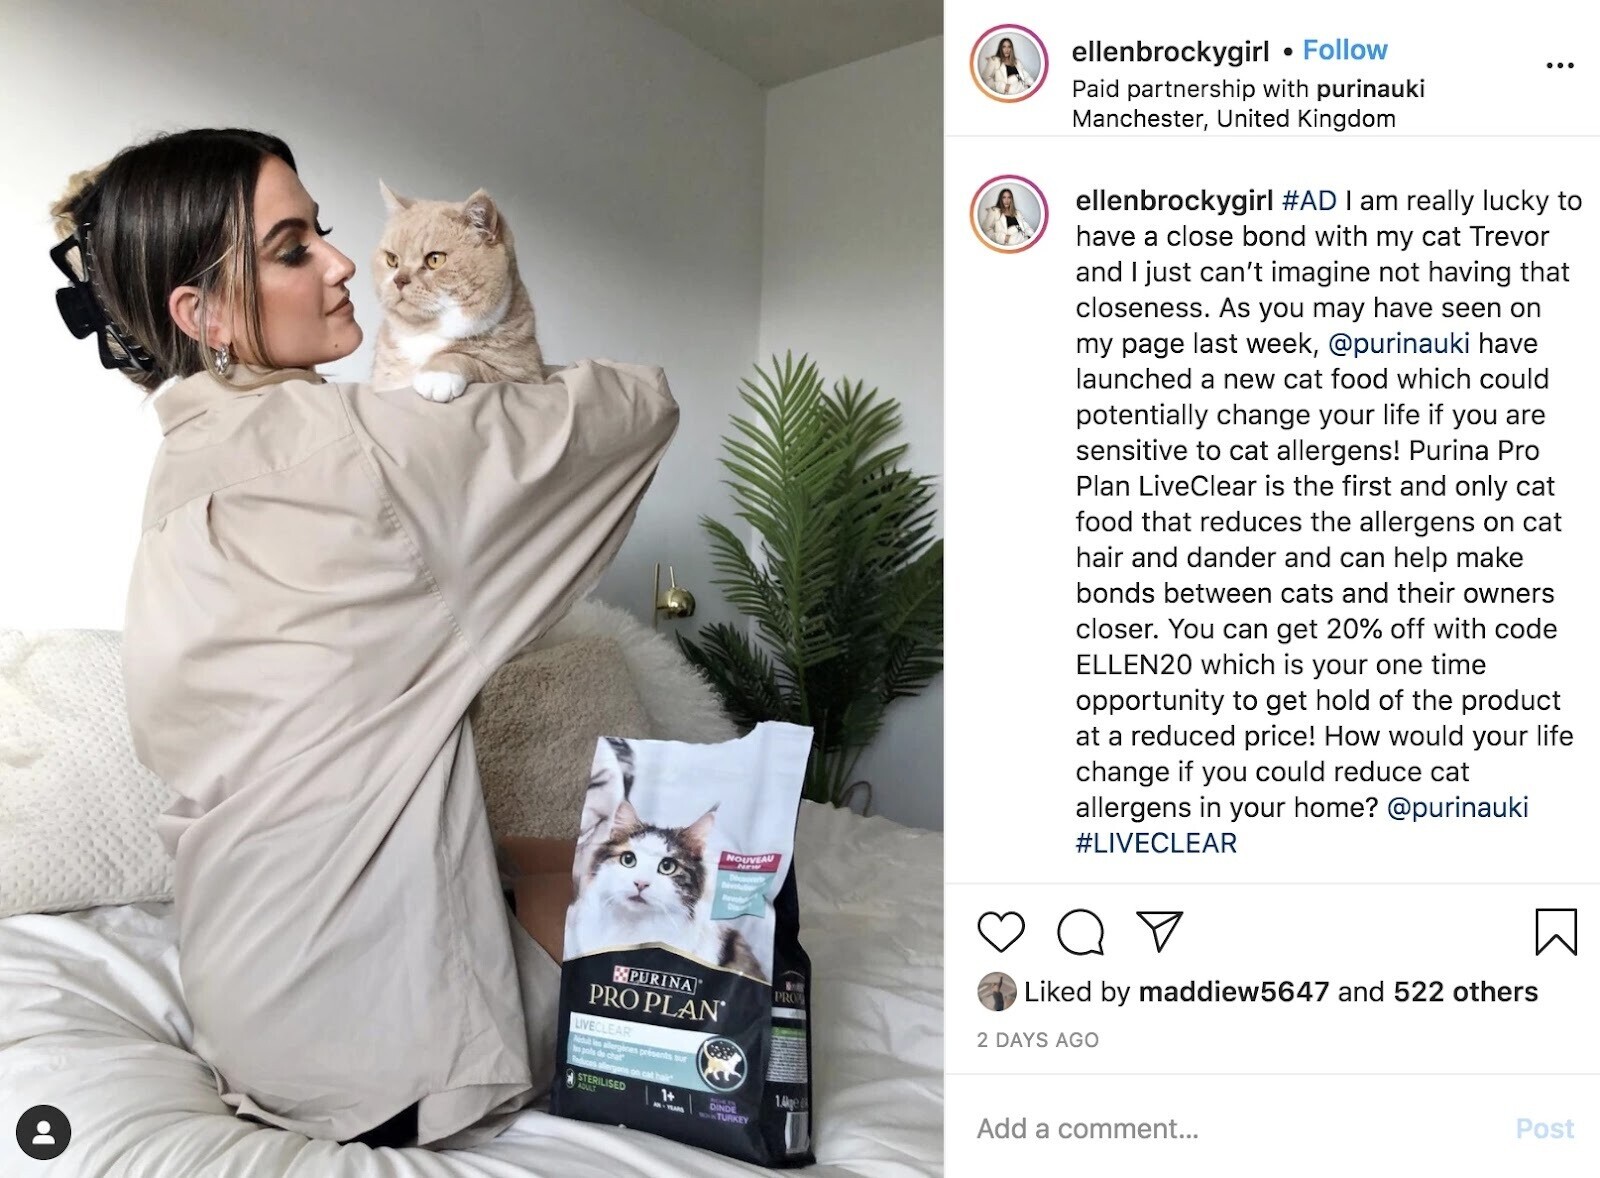 "@ellenbrockygirl" promotes Purina in her Instagram post